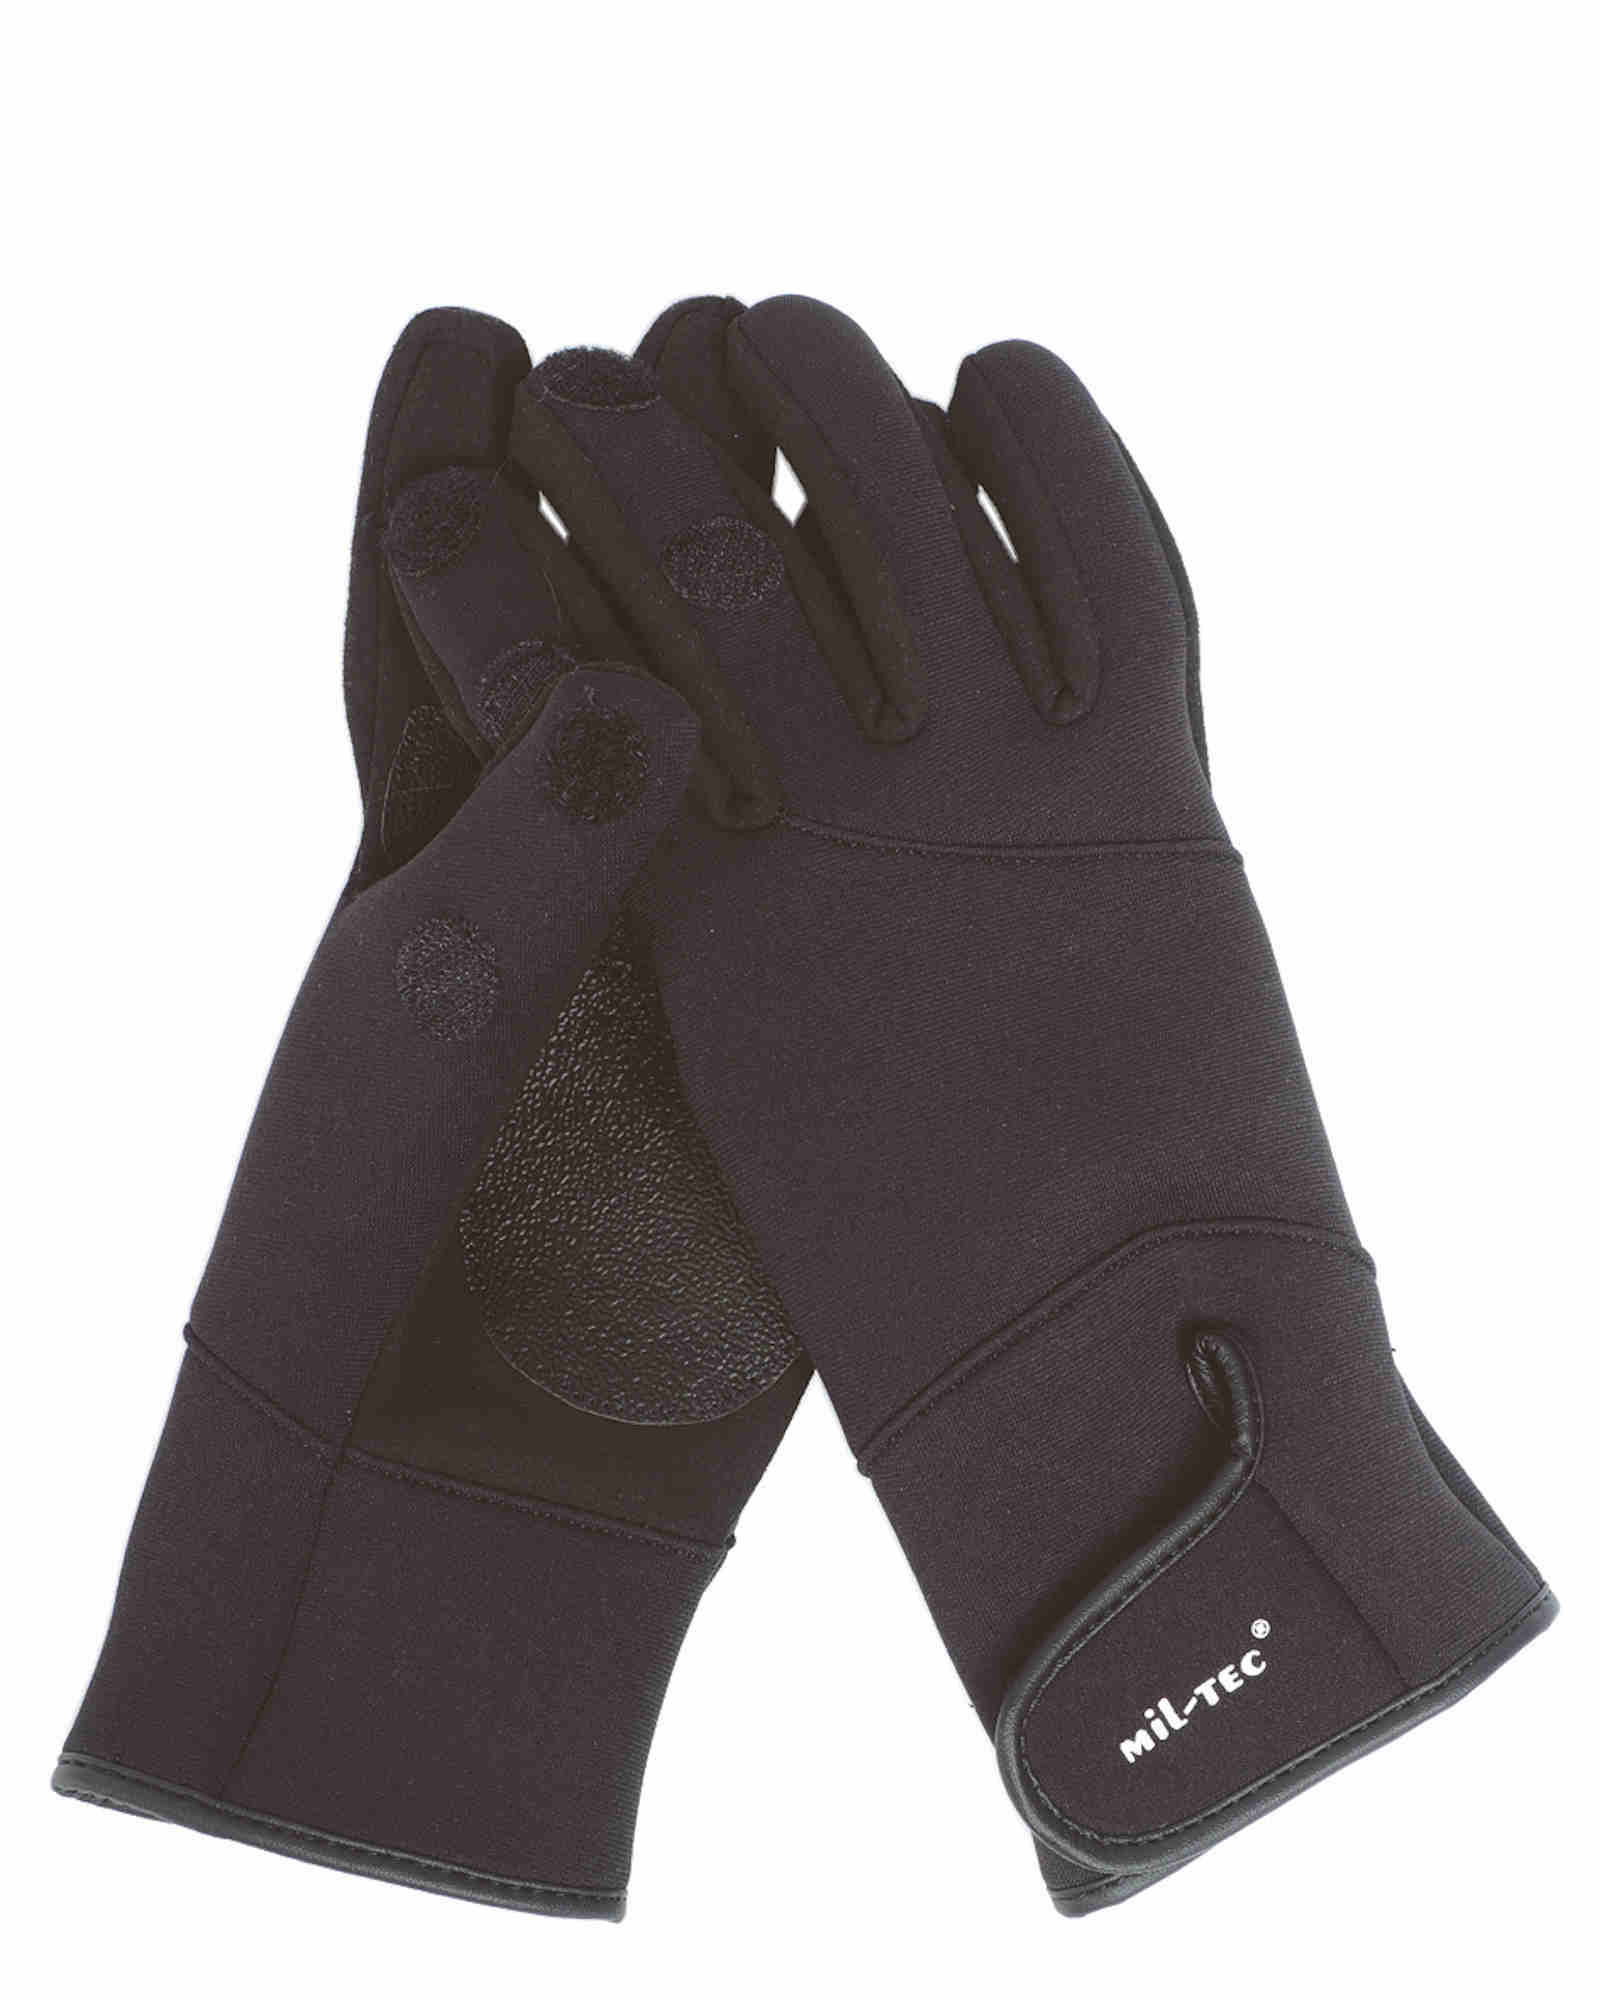 NEU US Tactical NEOPREN/AMARO Handschuhe Shooting Gloves Einsatzhandschuhe 